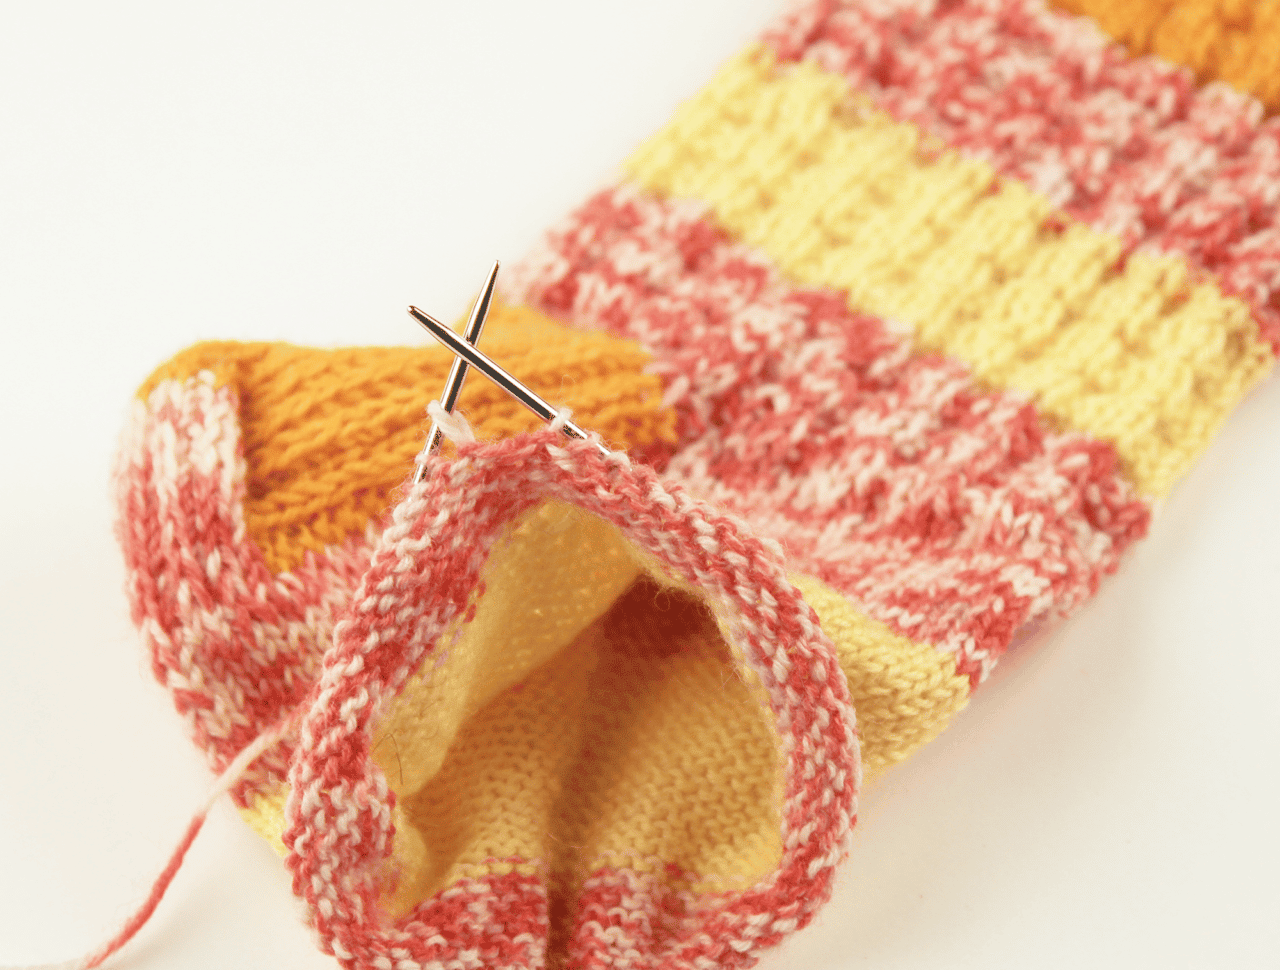 Knitting needles for knitting socks - with the mini circular knitting needle Sockwunder